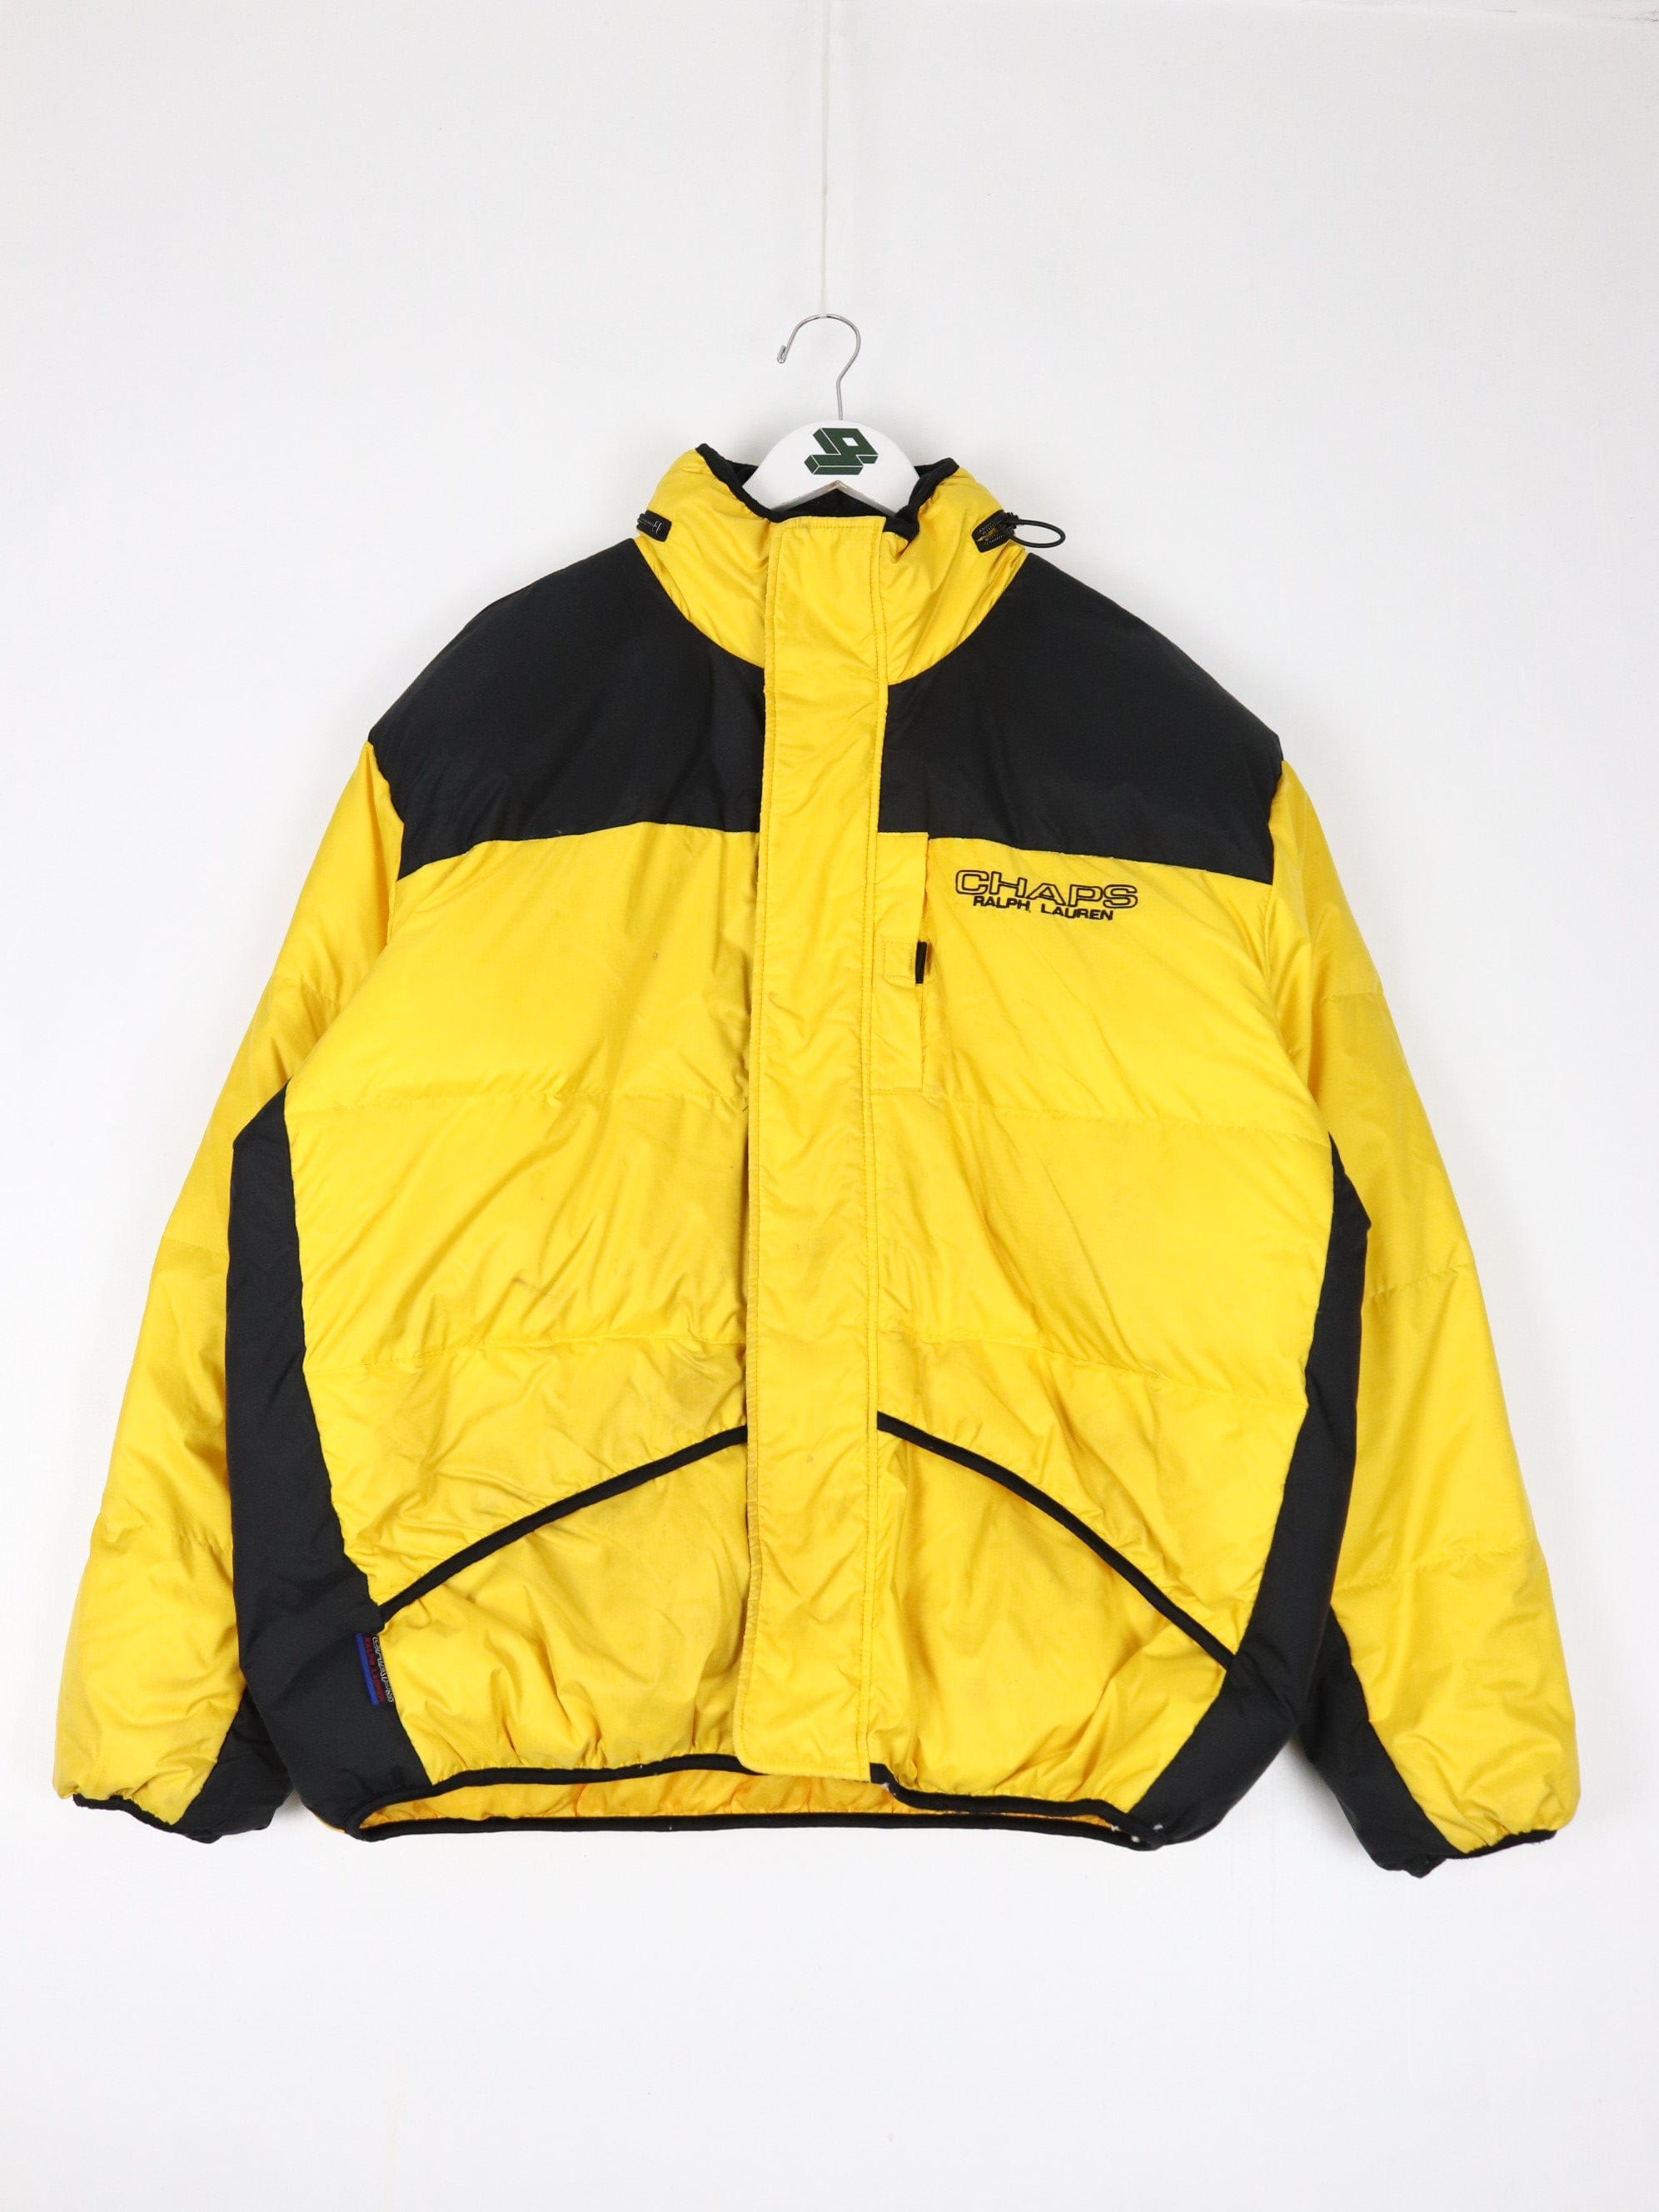 Vintage Chaps Ralph Lauren Jacket Mens XL Yellow Down Puffer Coat